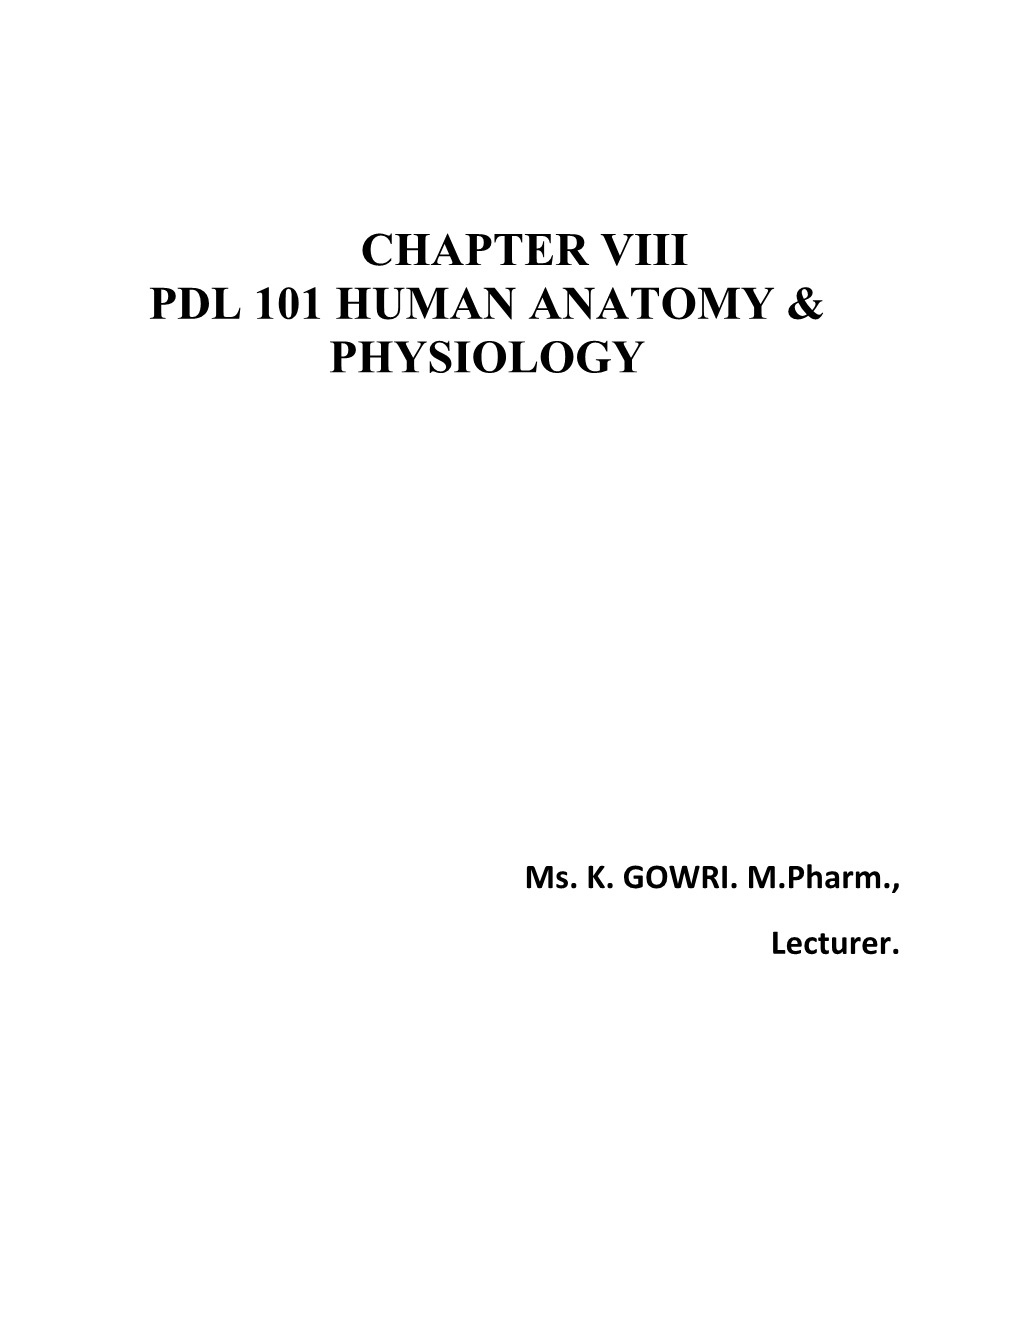 Chapter Viii Pdl 101 Human Anatomy & Physiology